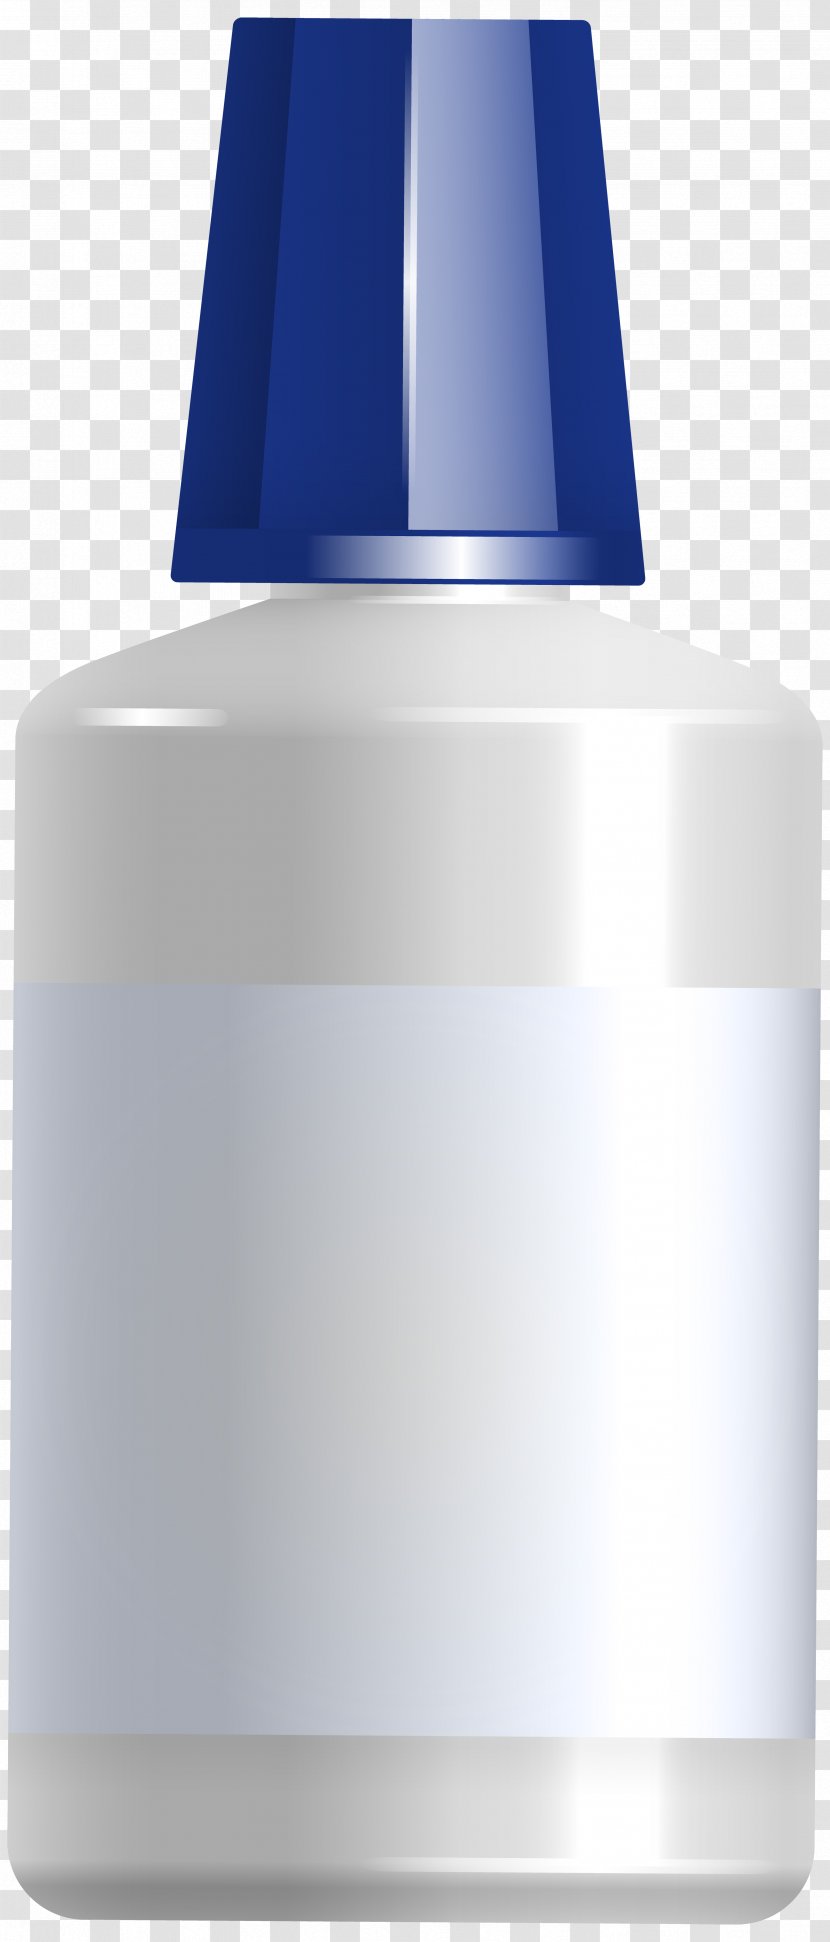 Liquid Cosmetics Bottle - Health Beauty - Glue Clip Art Image Transparent PNG